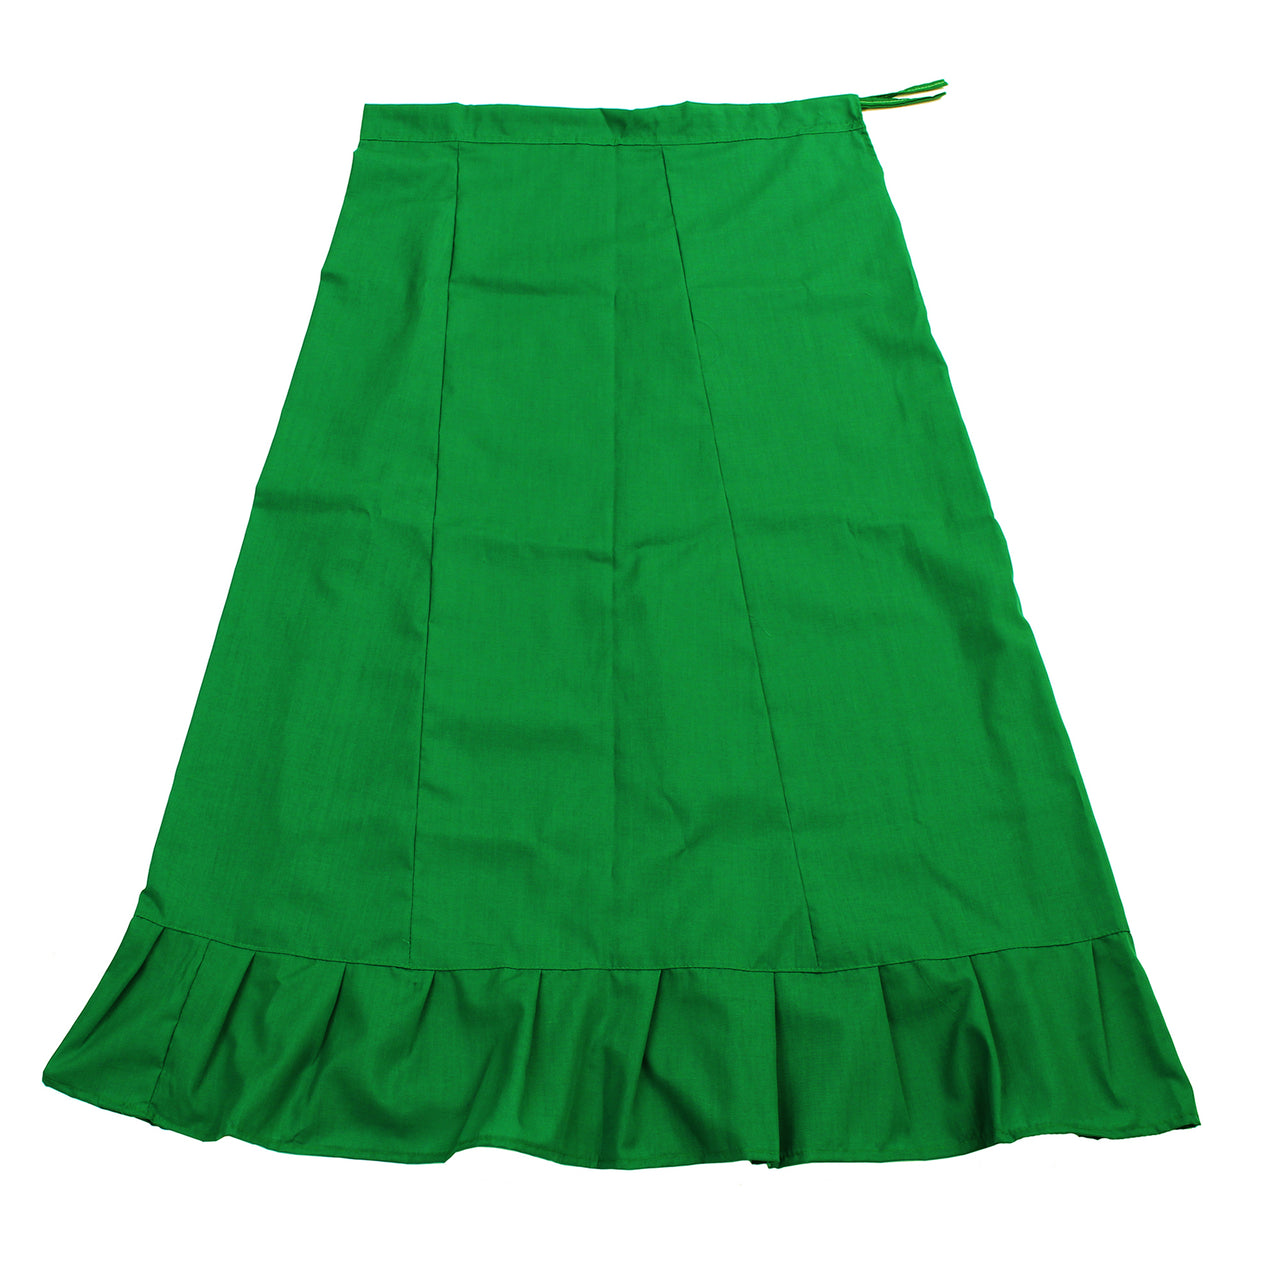 Emerald Green - Sari (Saree) Petticoat - Available in S, M, L & XL - Underskirts For Sari's